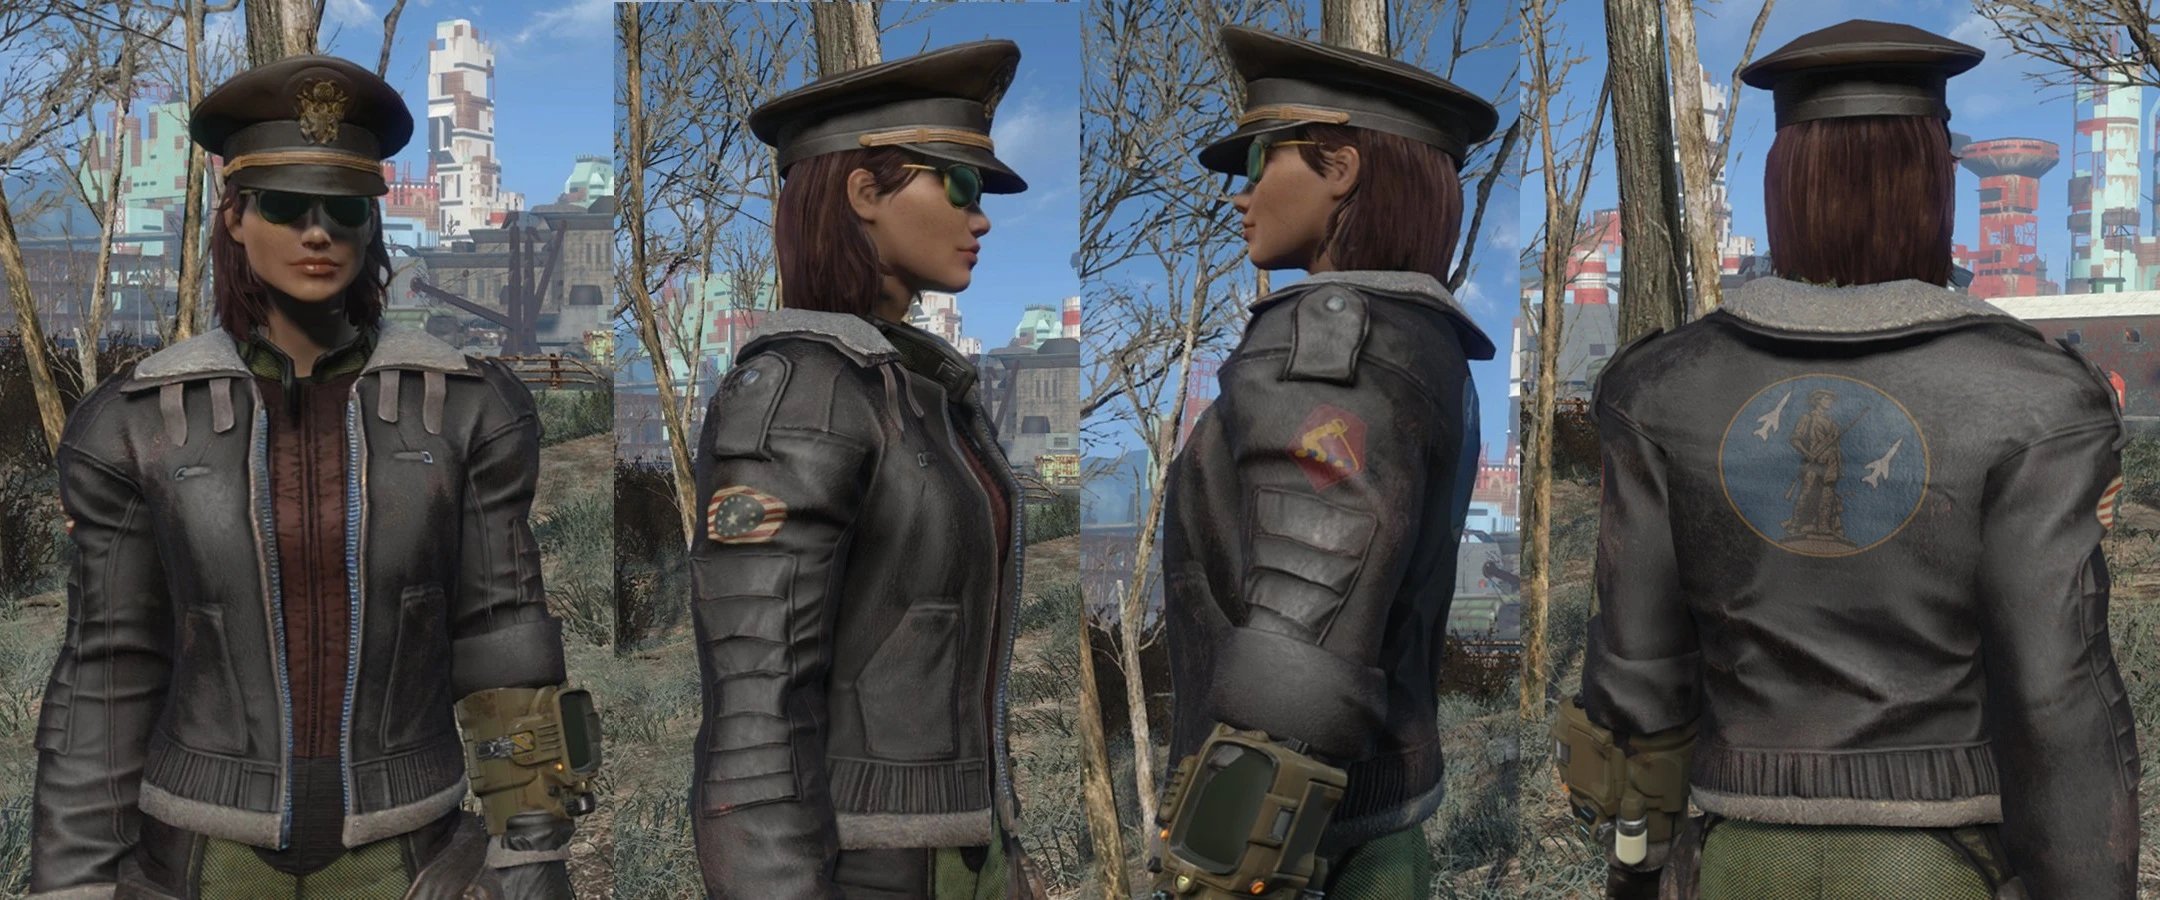 Fallout 4 Bomber Jacket Mod